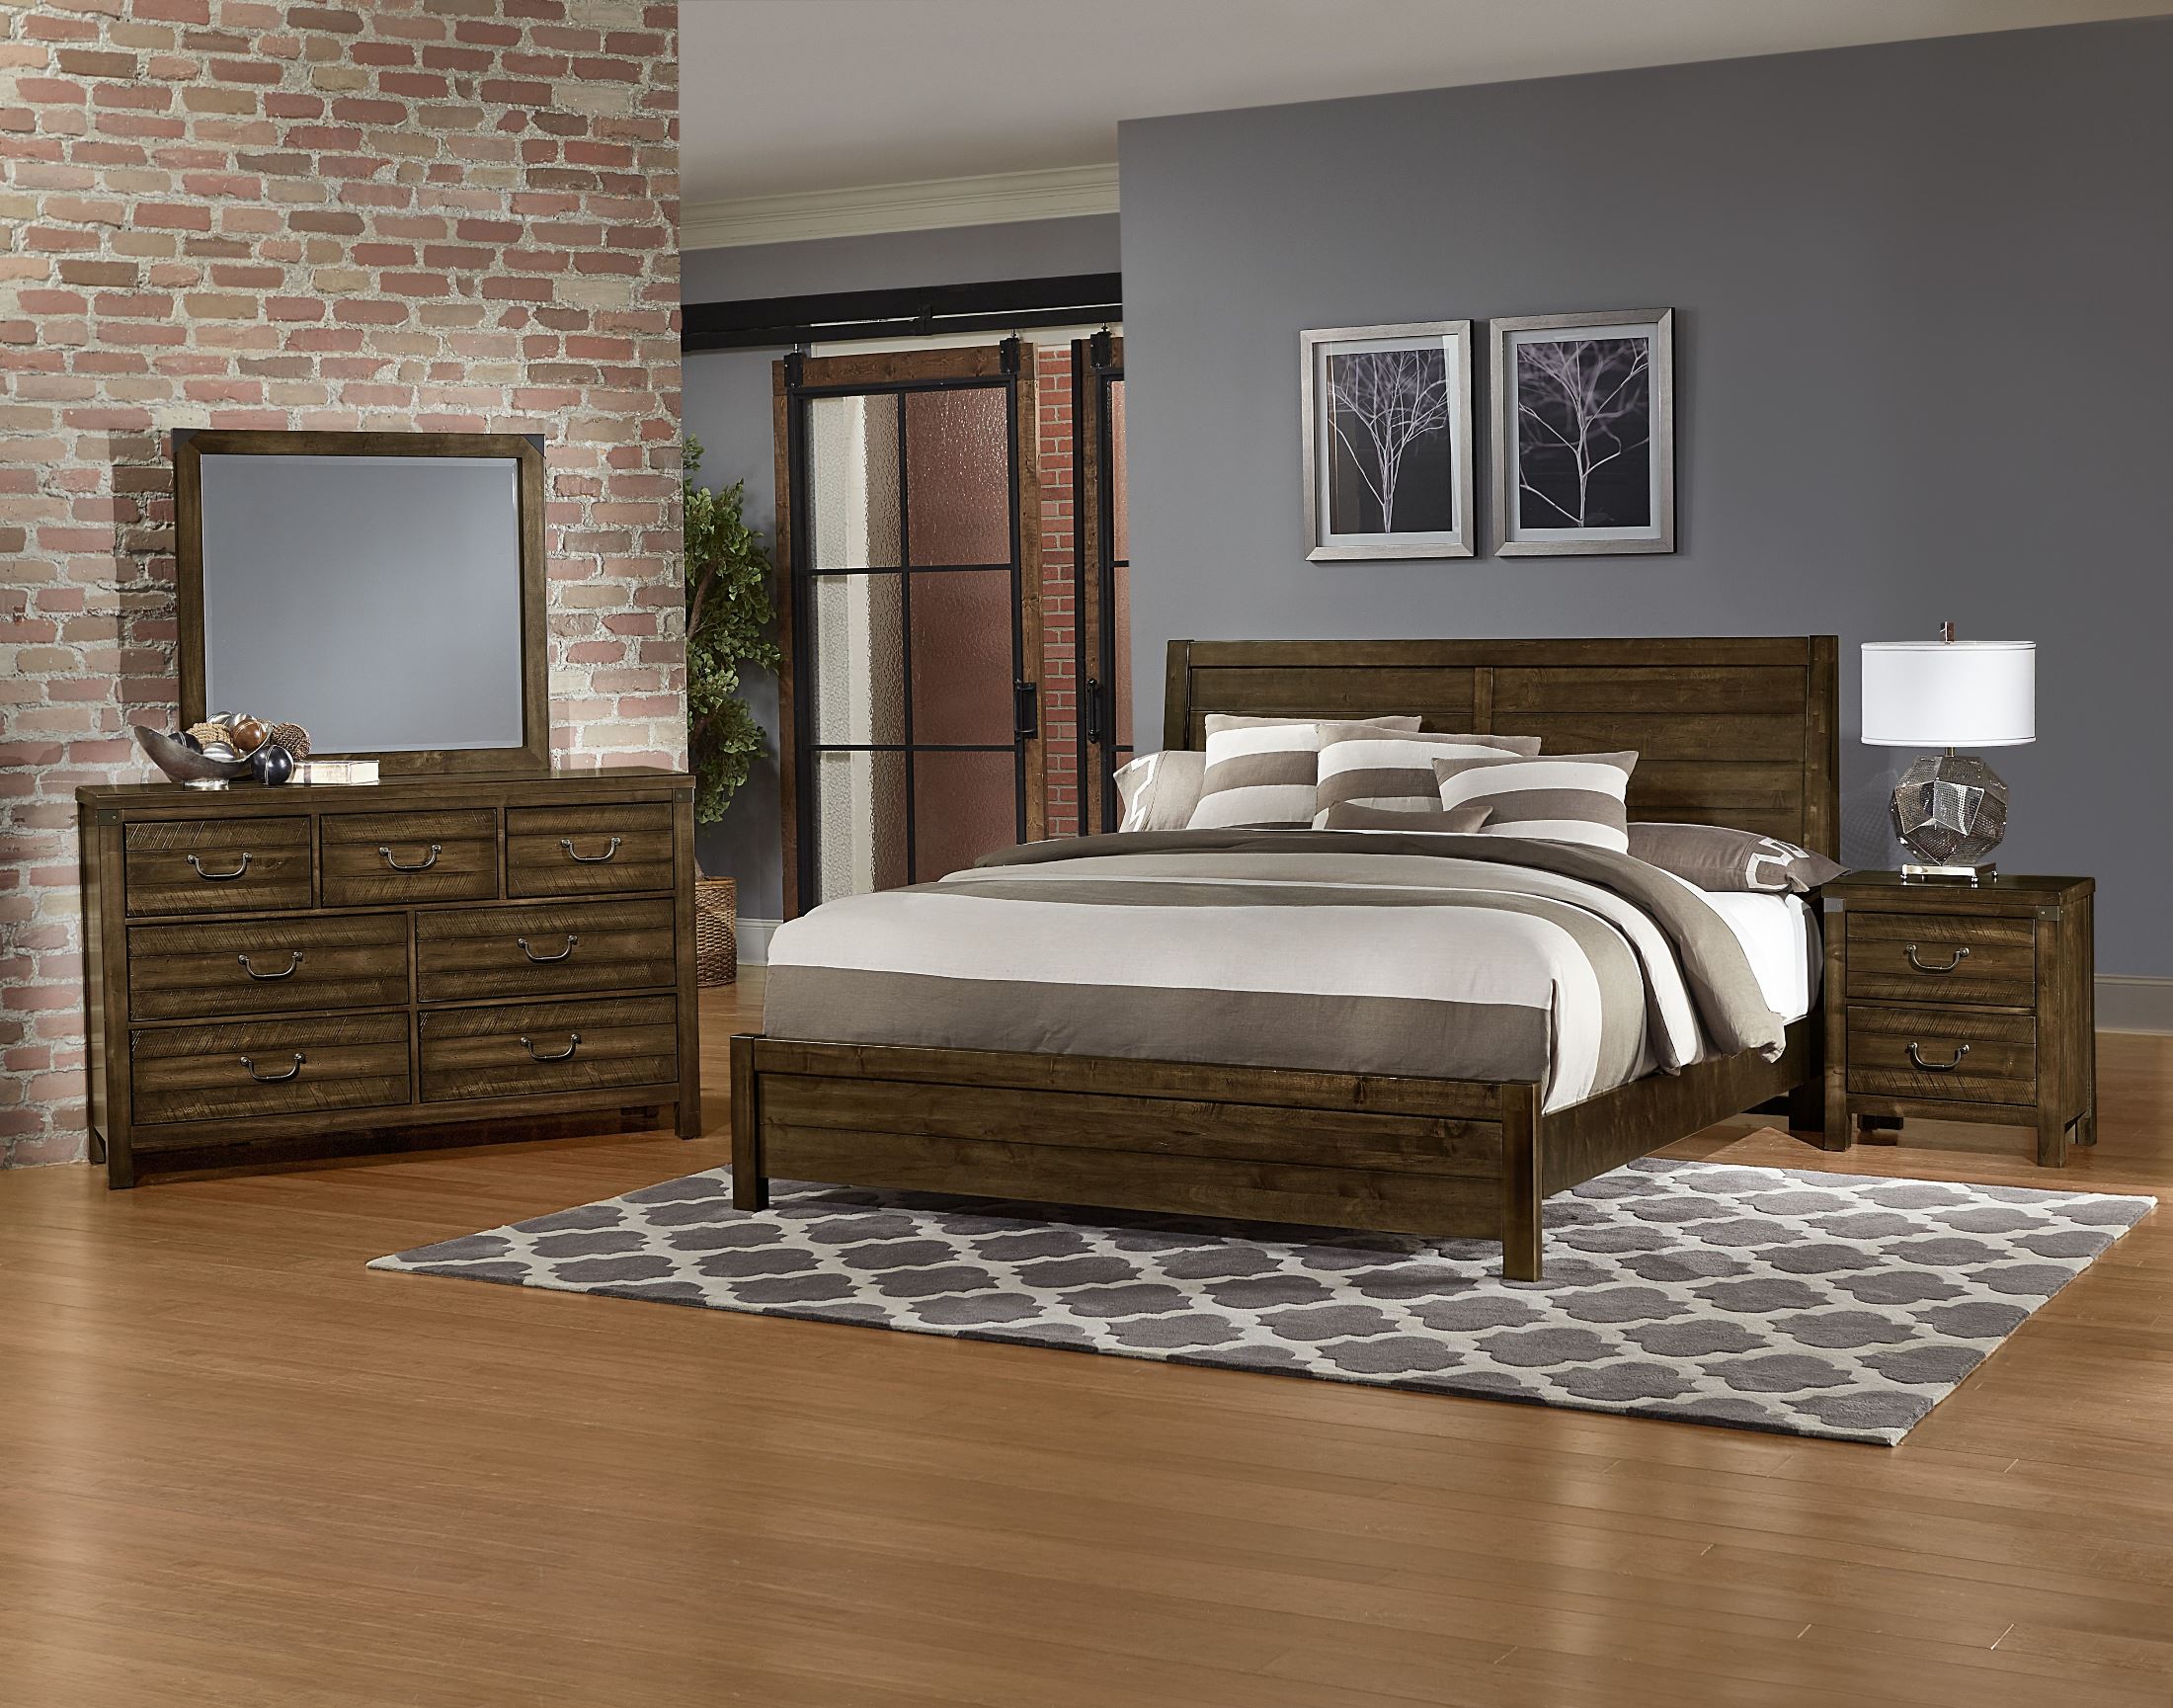 maple shaker bedroom furniture